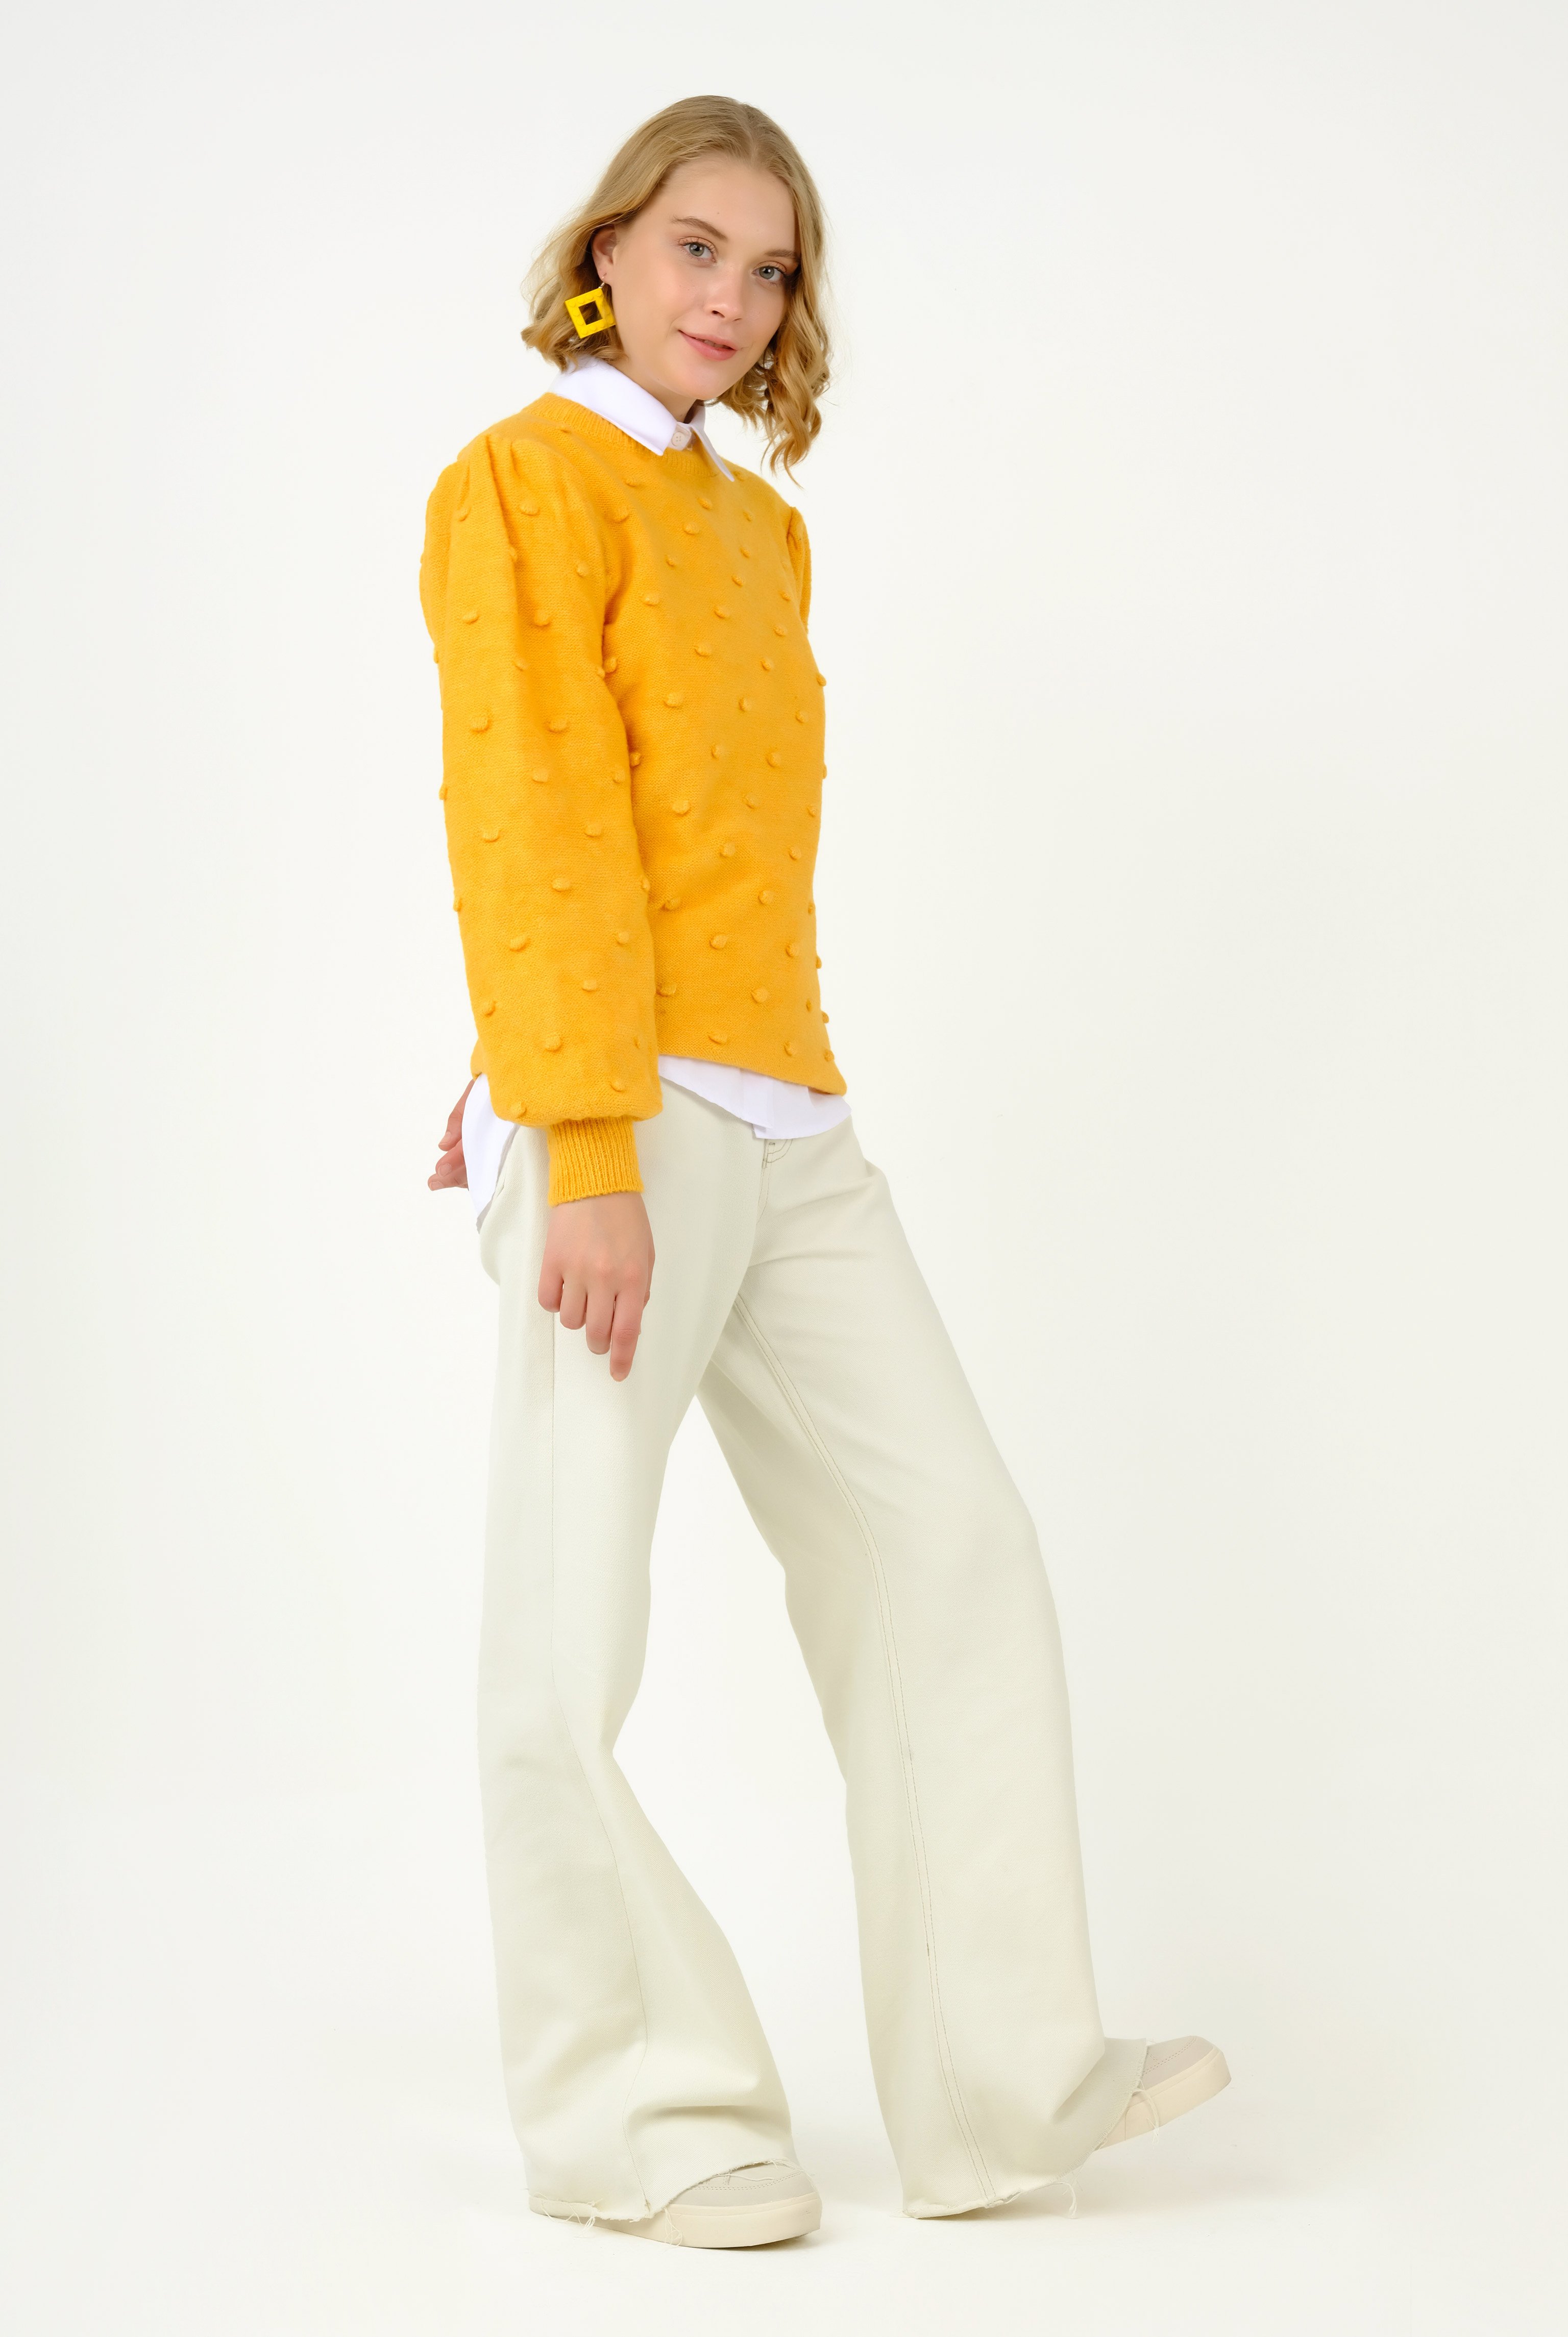 Chickpeas Sweater Yellow 